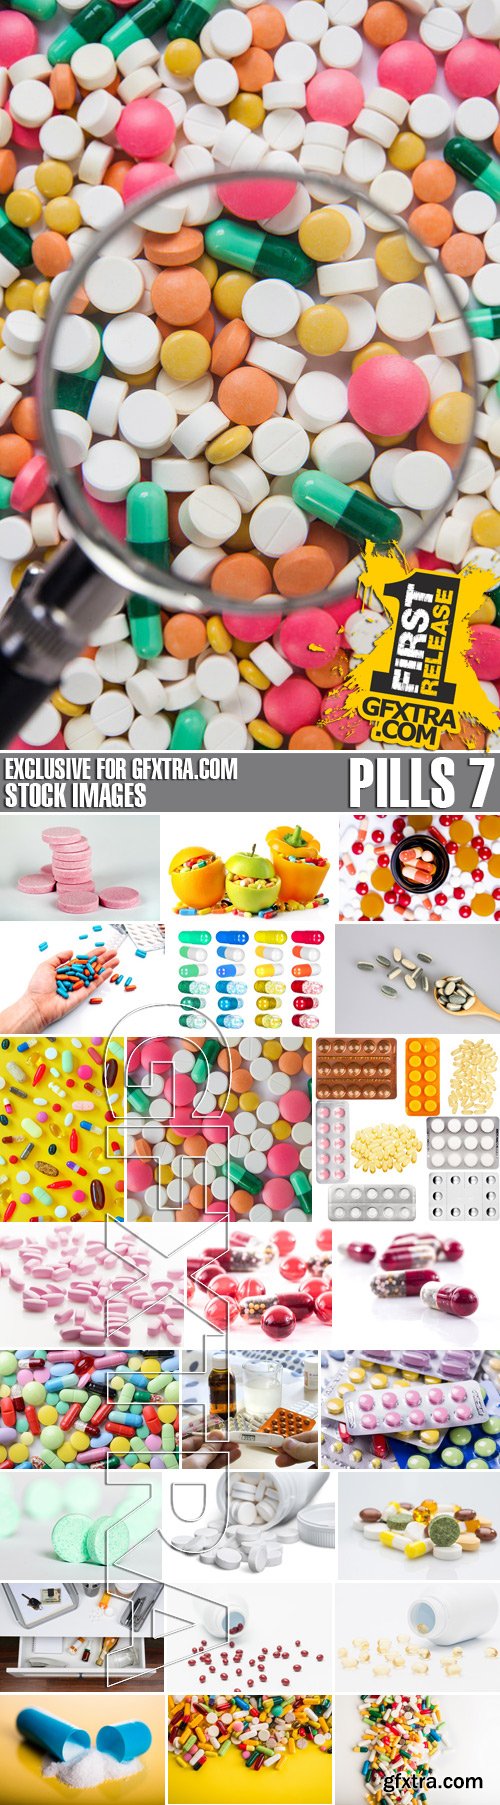 Stock Photos - Pills 7, 25xJPG